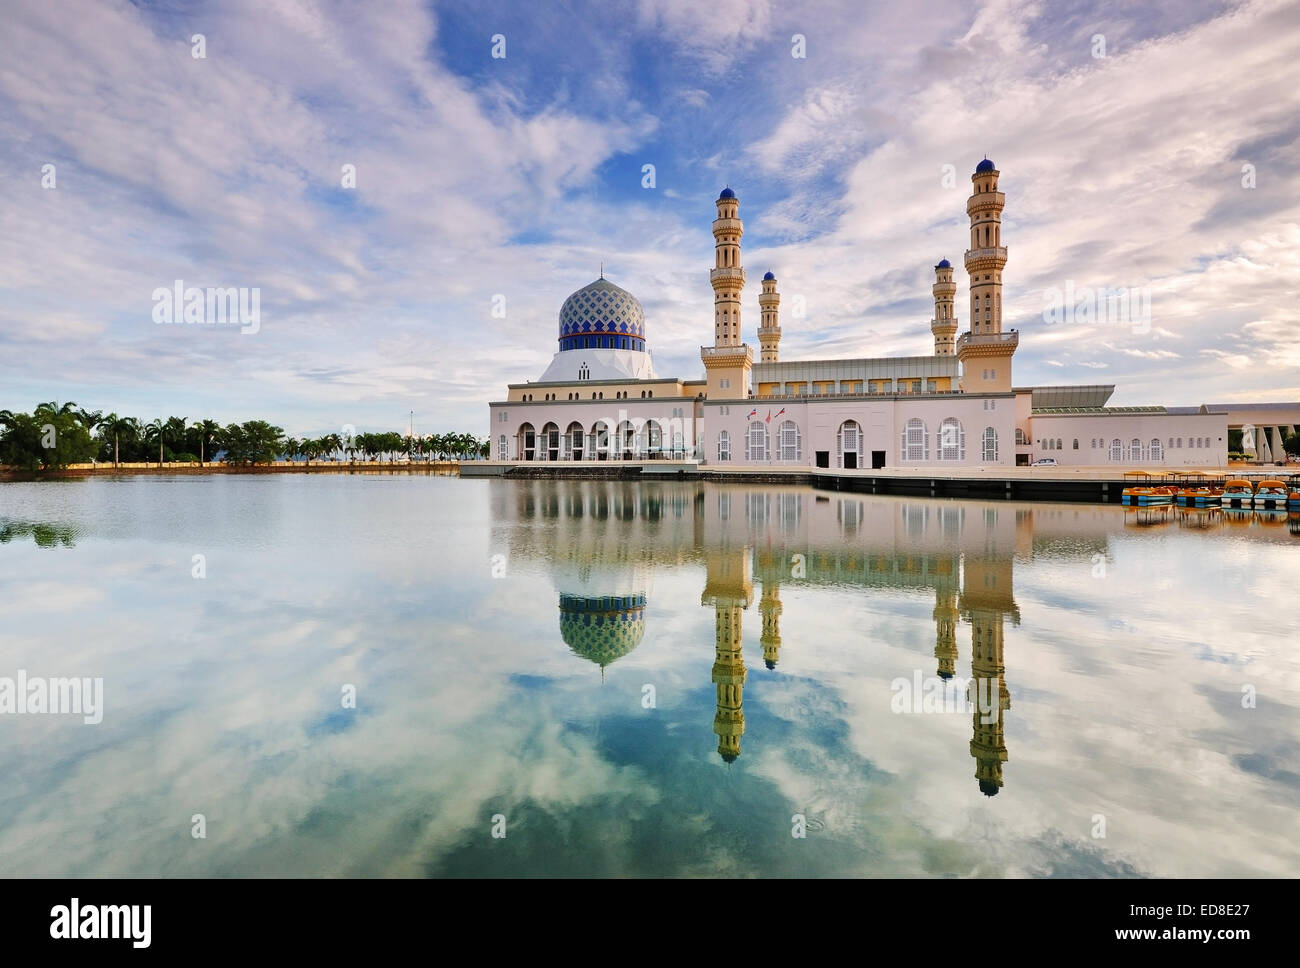 Kota Kinabalu Floating Mosque Day Time Image With Reflection Stock Photo